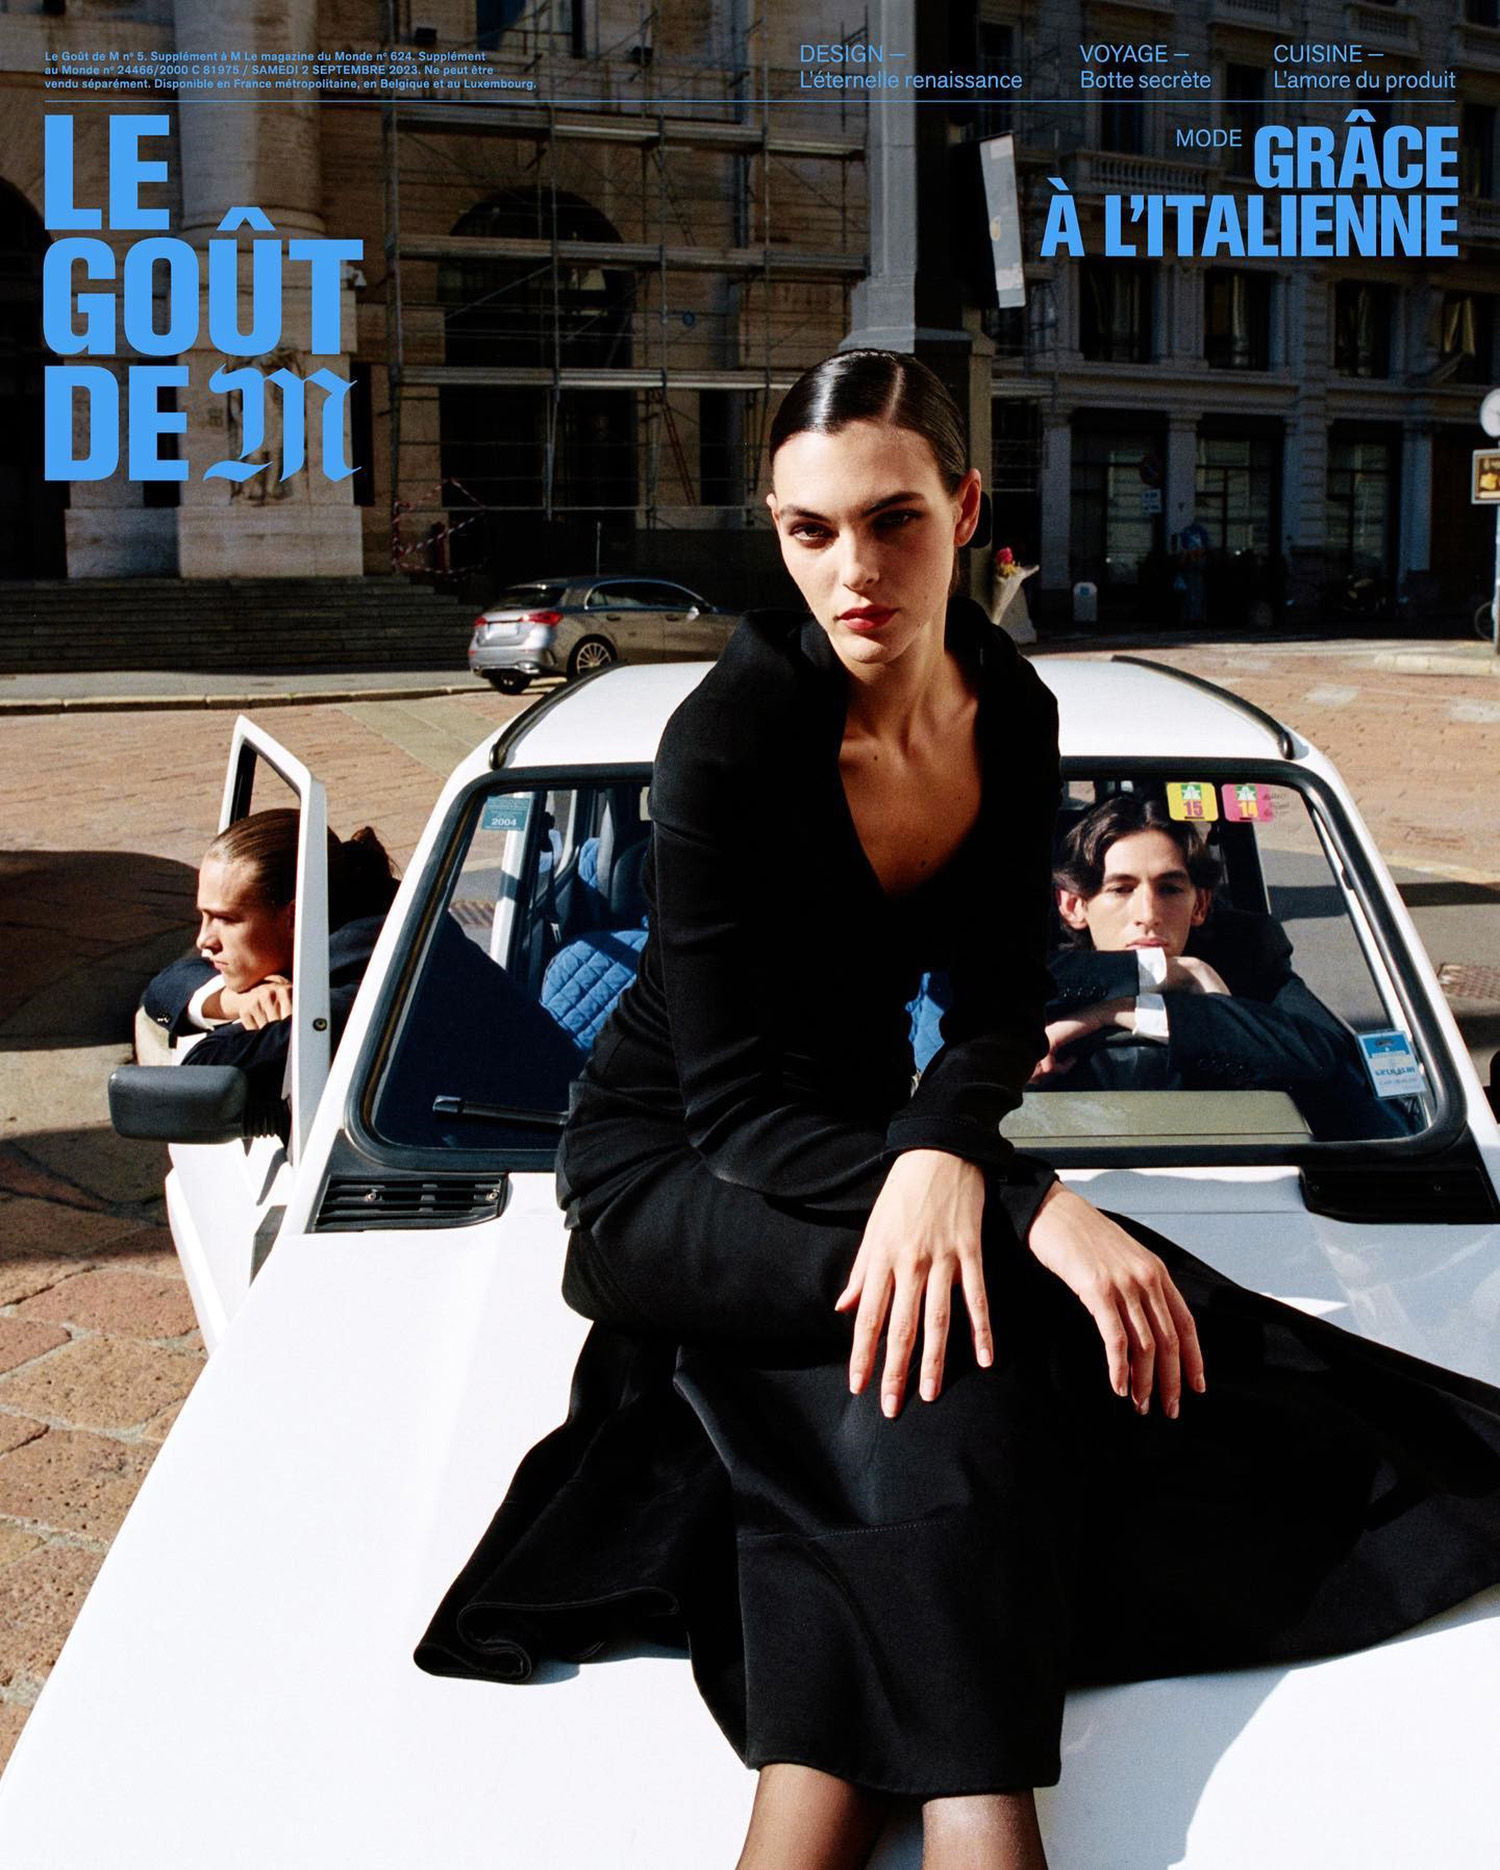 Vittoria Ceretti covers Le Goût de M September 2nd, 2023 by Tim Elkaïm